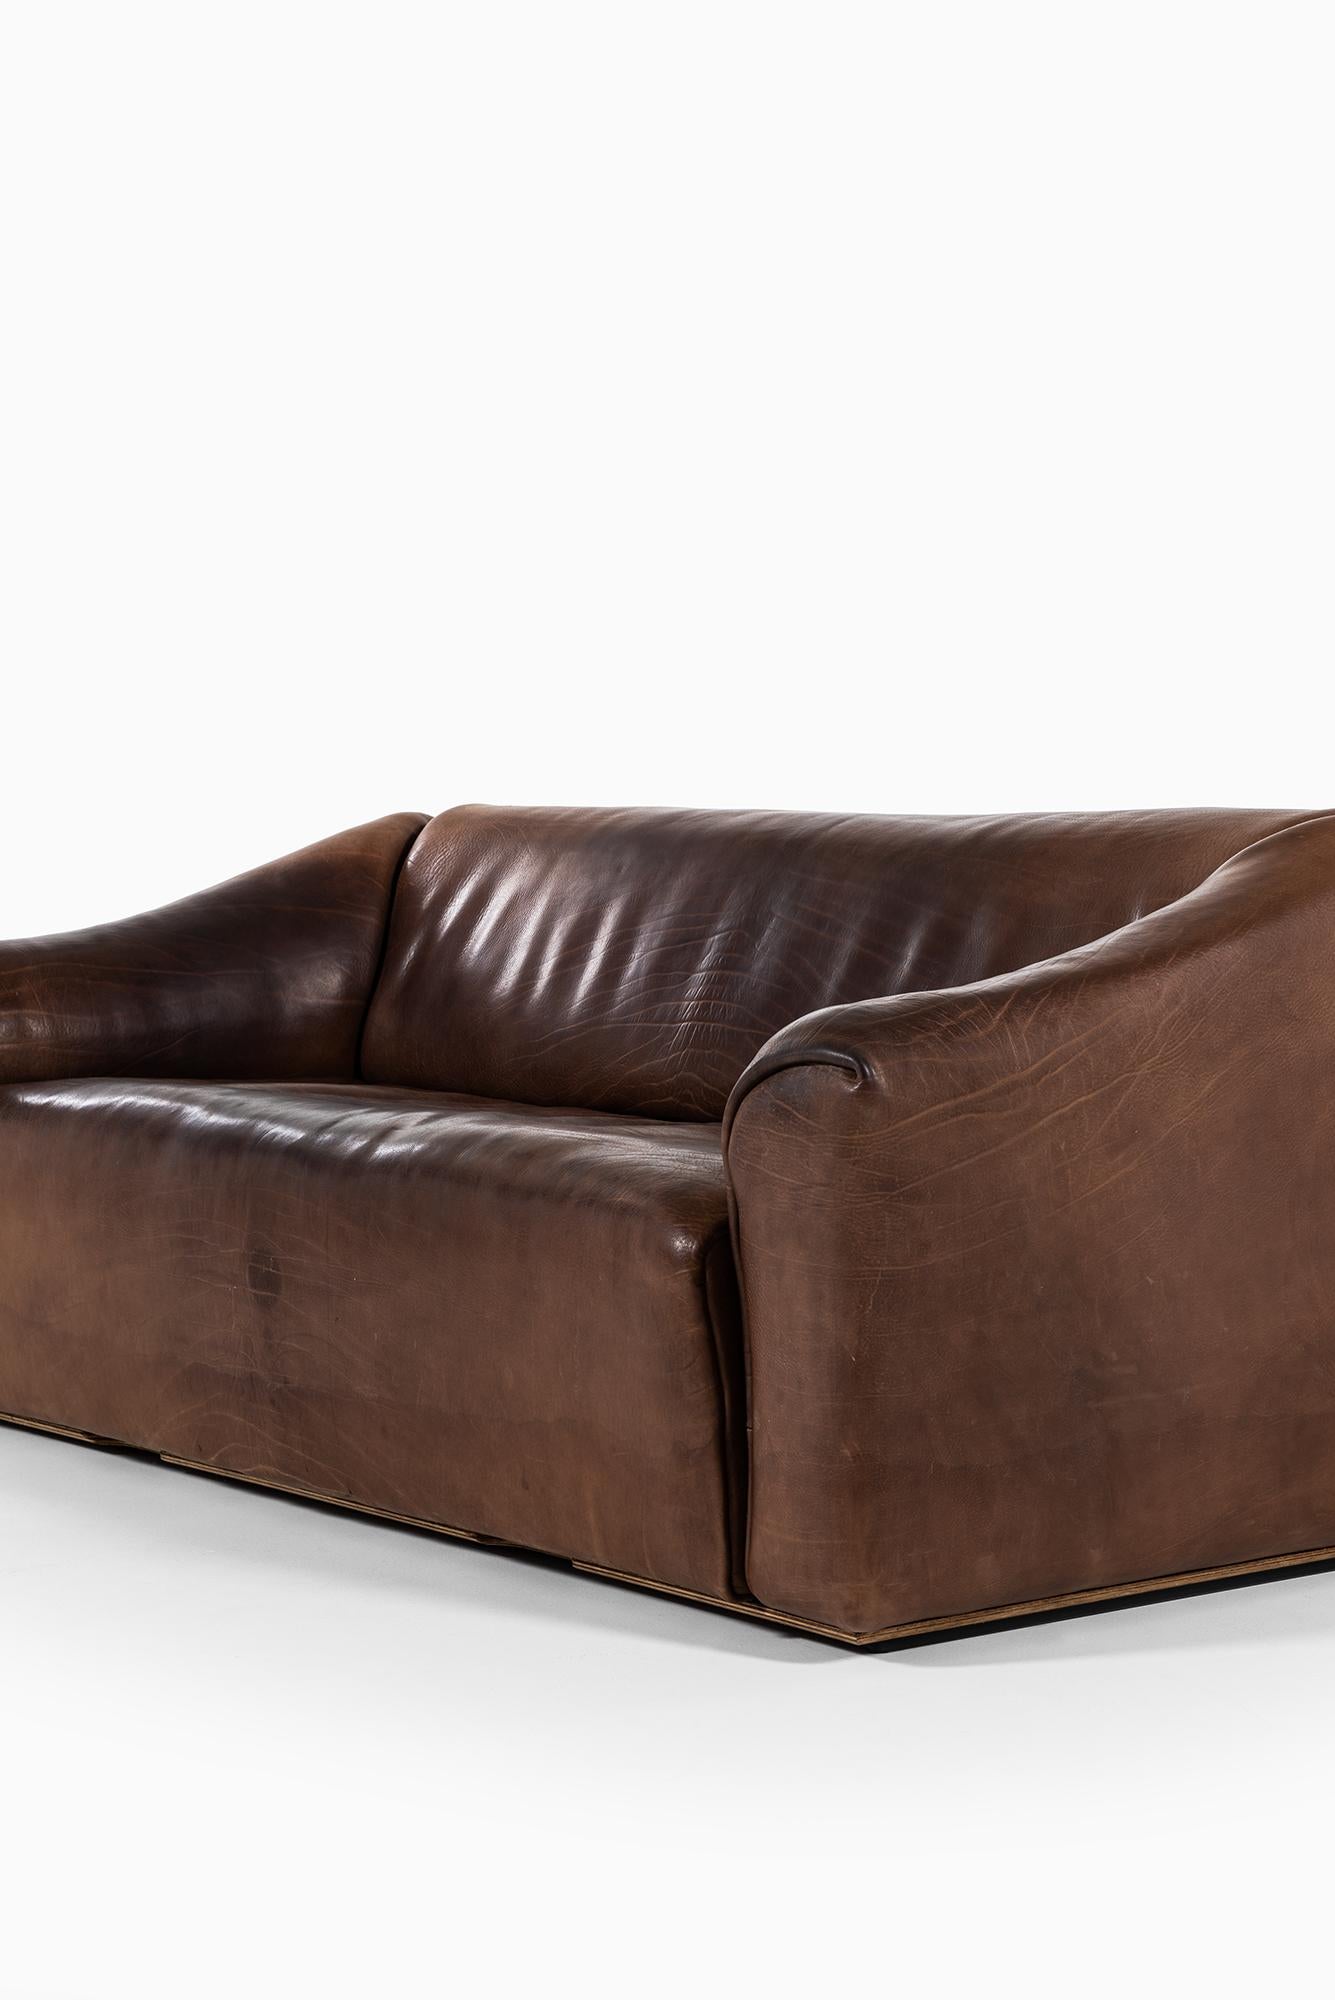 Leather De Sede DS-47 Sofa Produced by De Sede in Switzerland